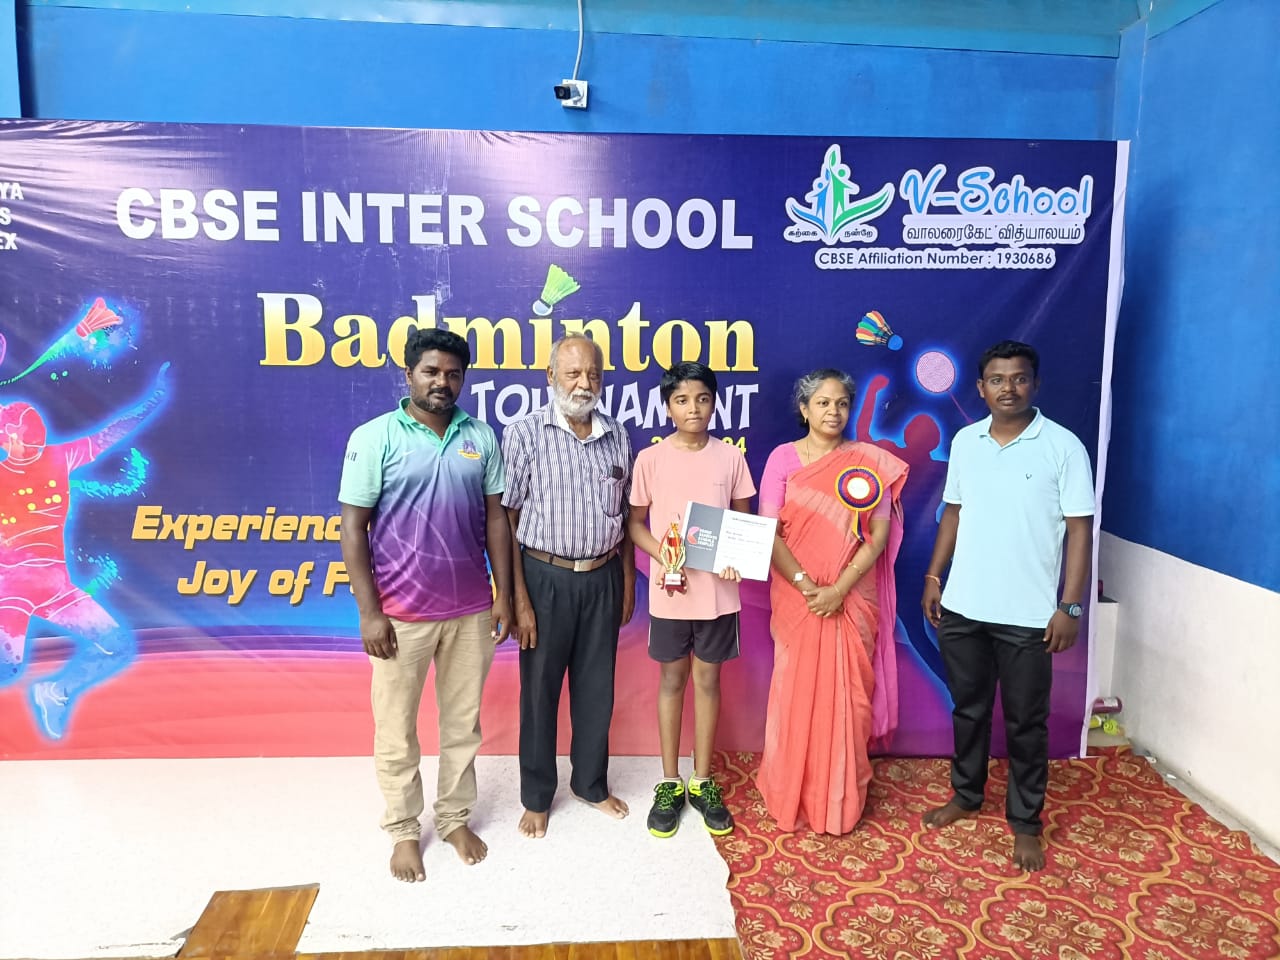 KSSC Badminton tournament boys